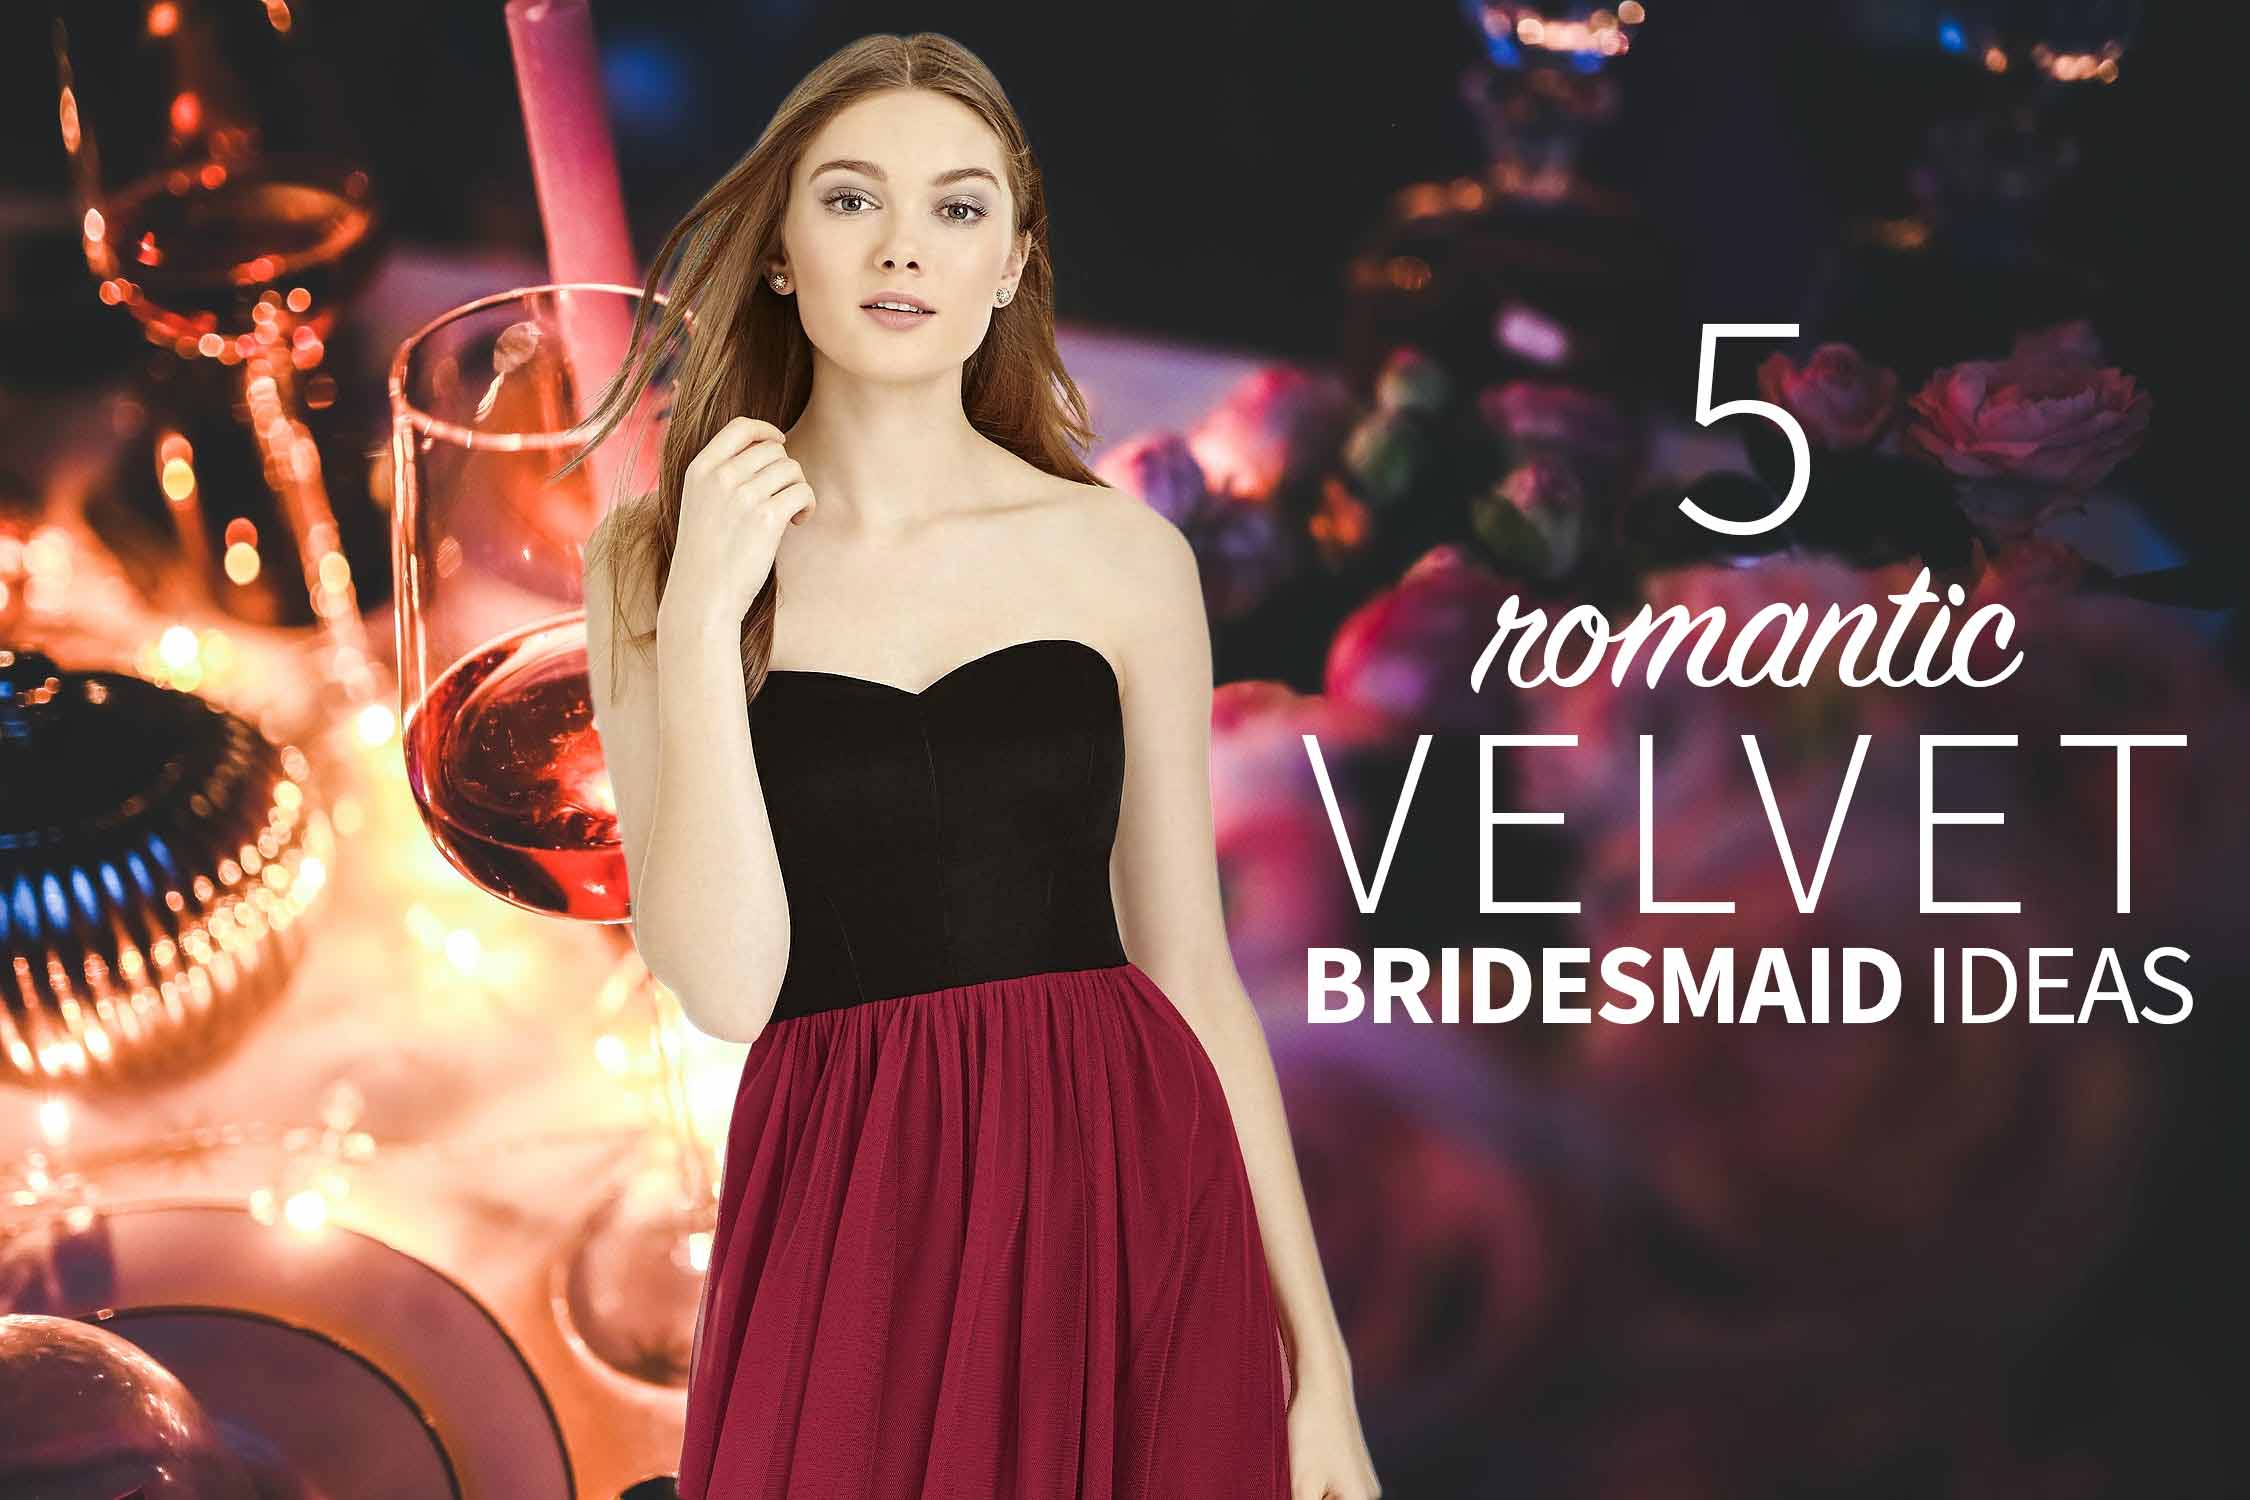 5 romantic velvet bridesmaid dress ideas